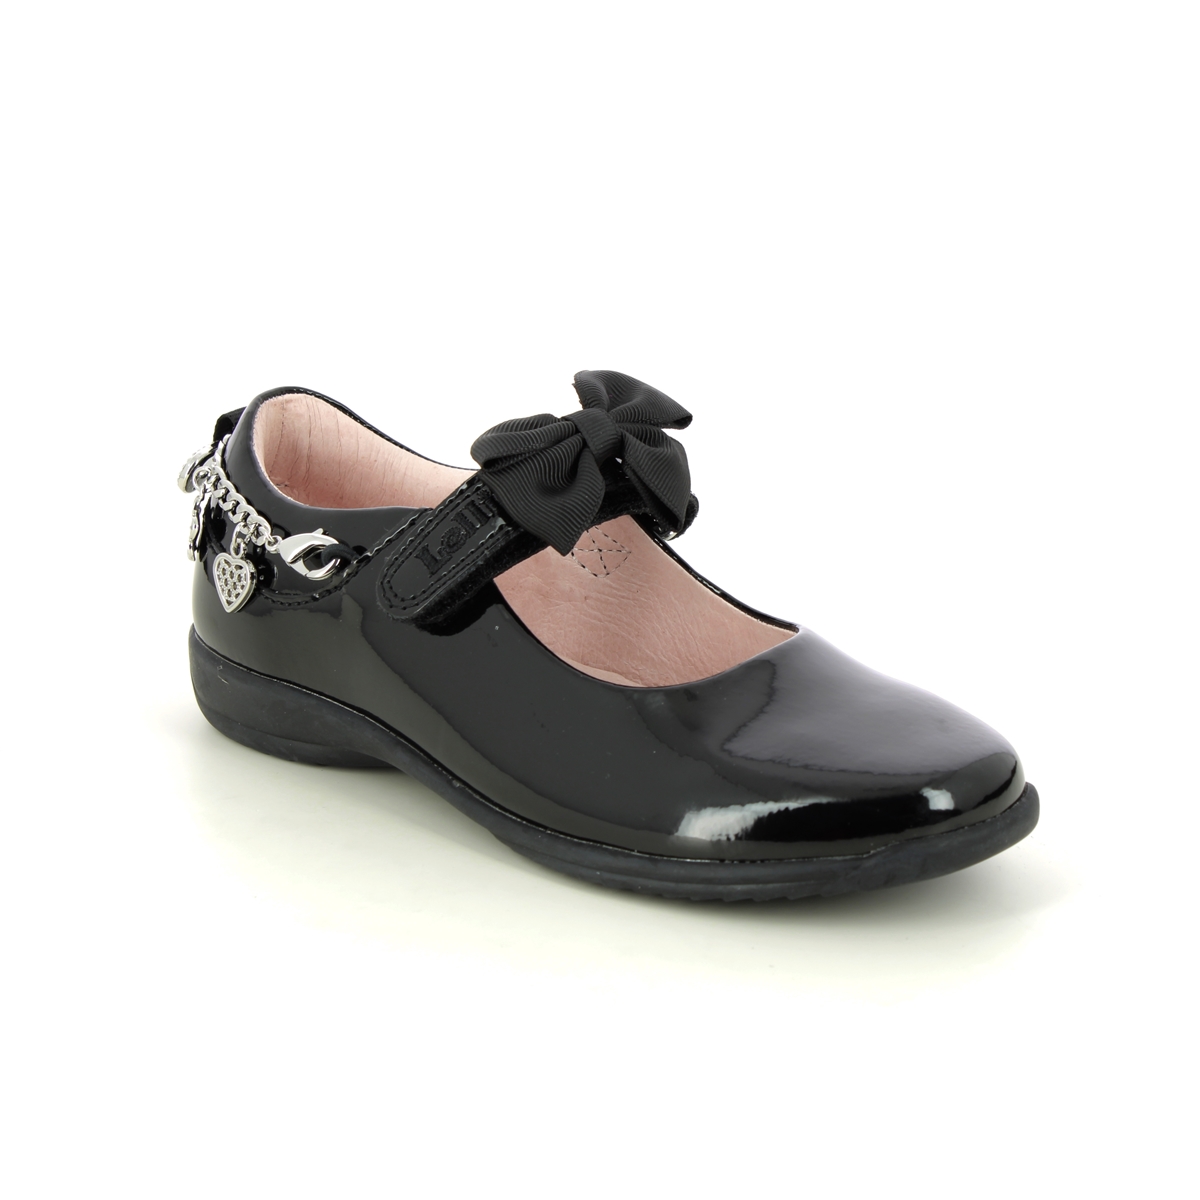 Lelli Kelly - Alicia Bracelet F In Black Patent Lk8219-Db01 In Size 30 In Plain Black Patent Girls Shoes  In Black Patent For School For kids